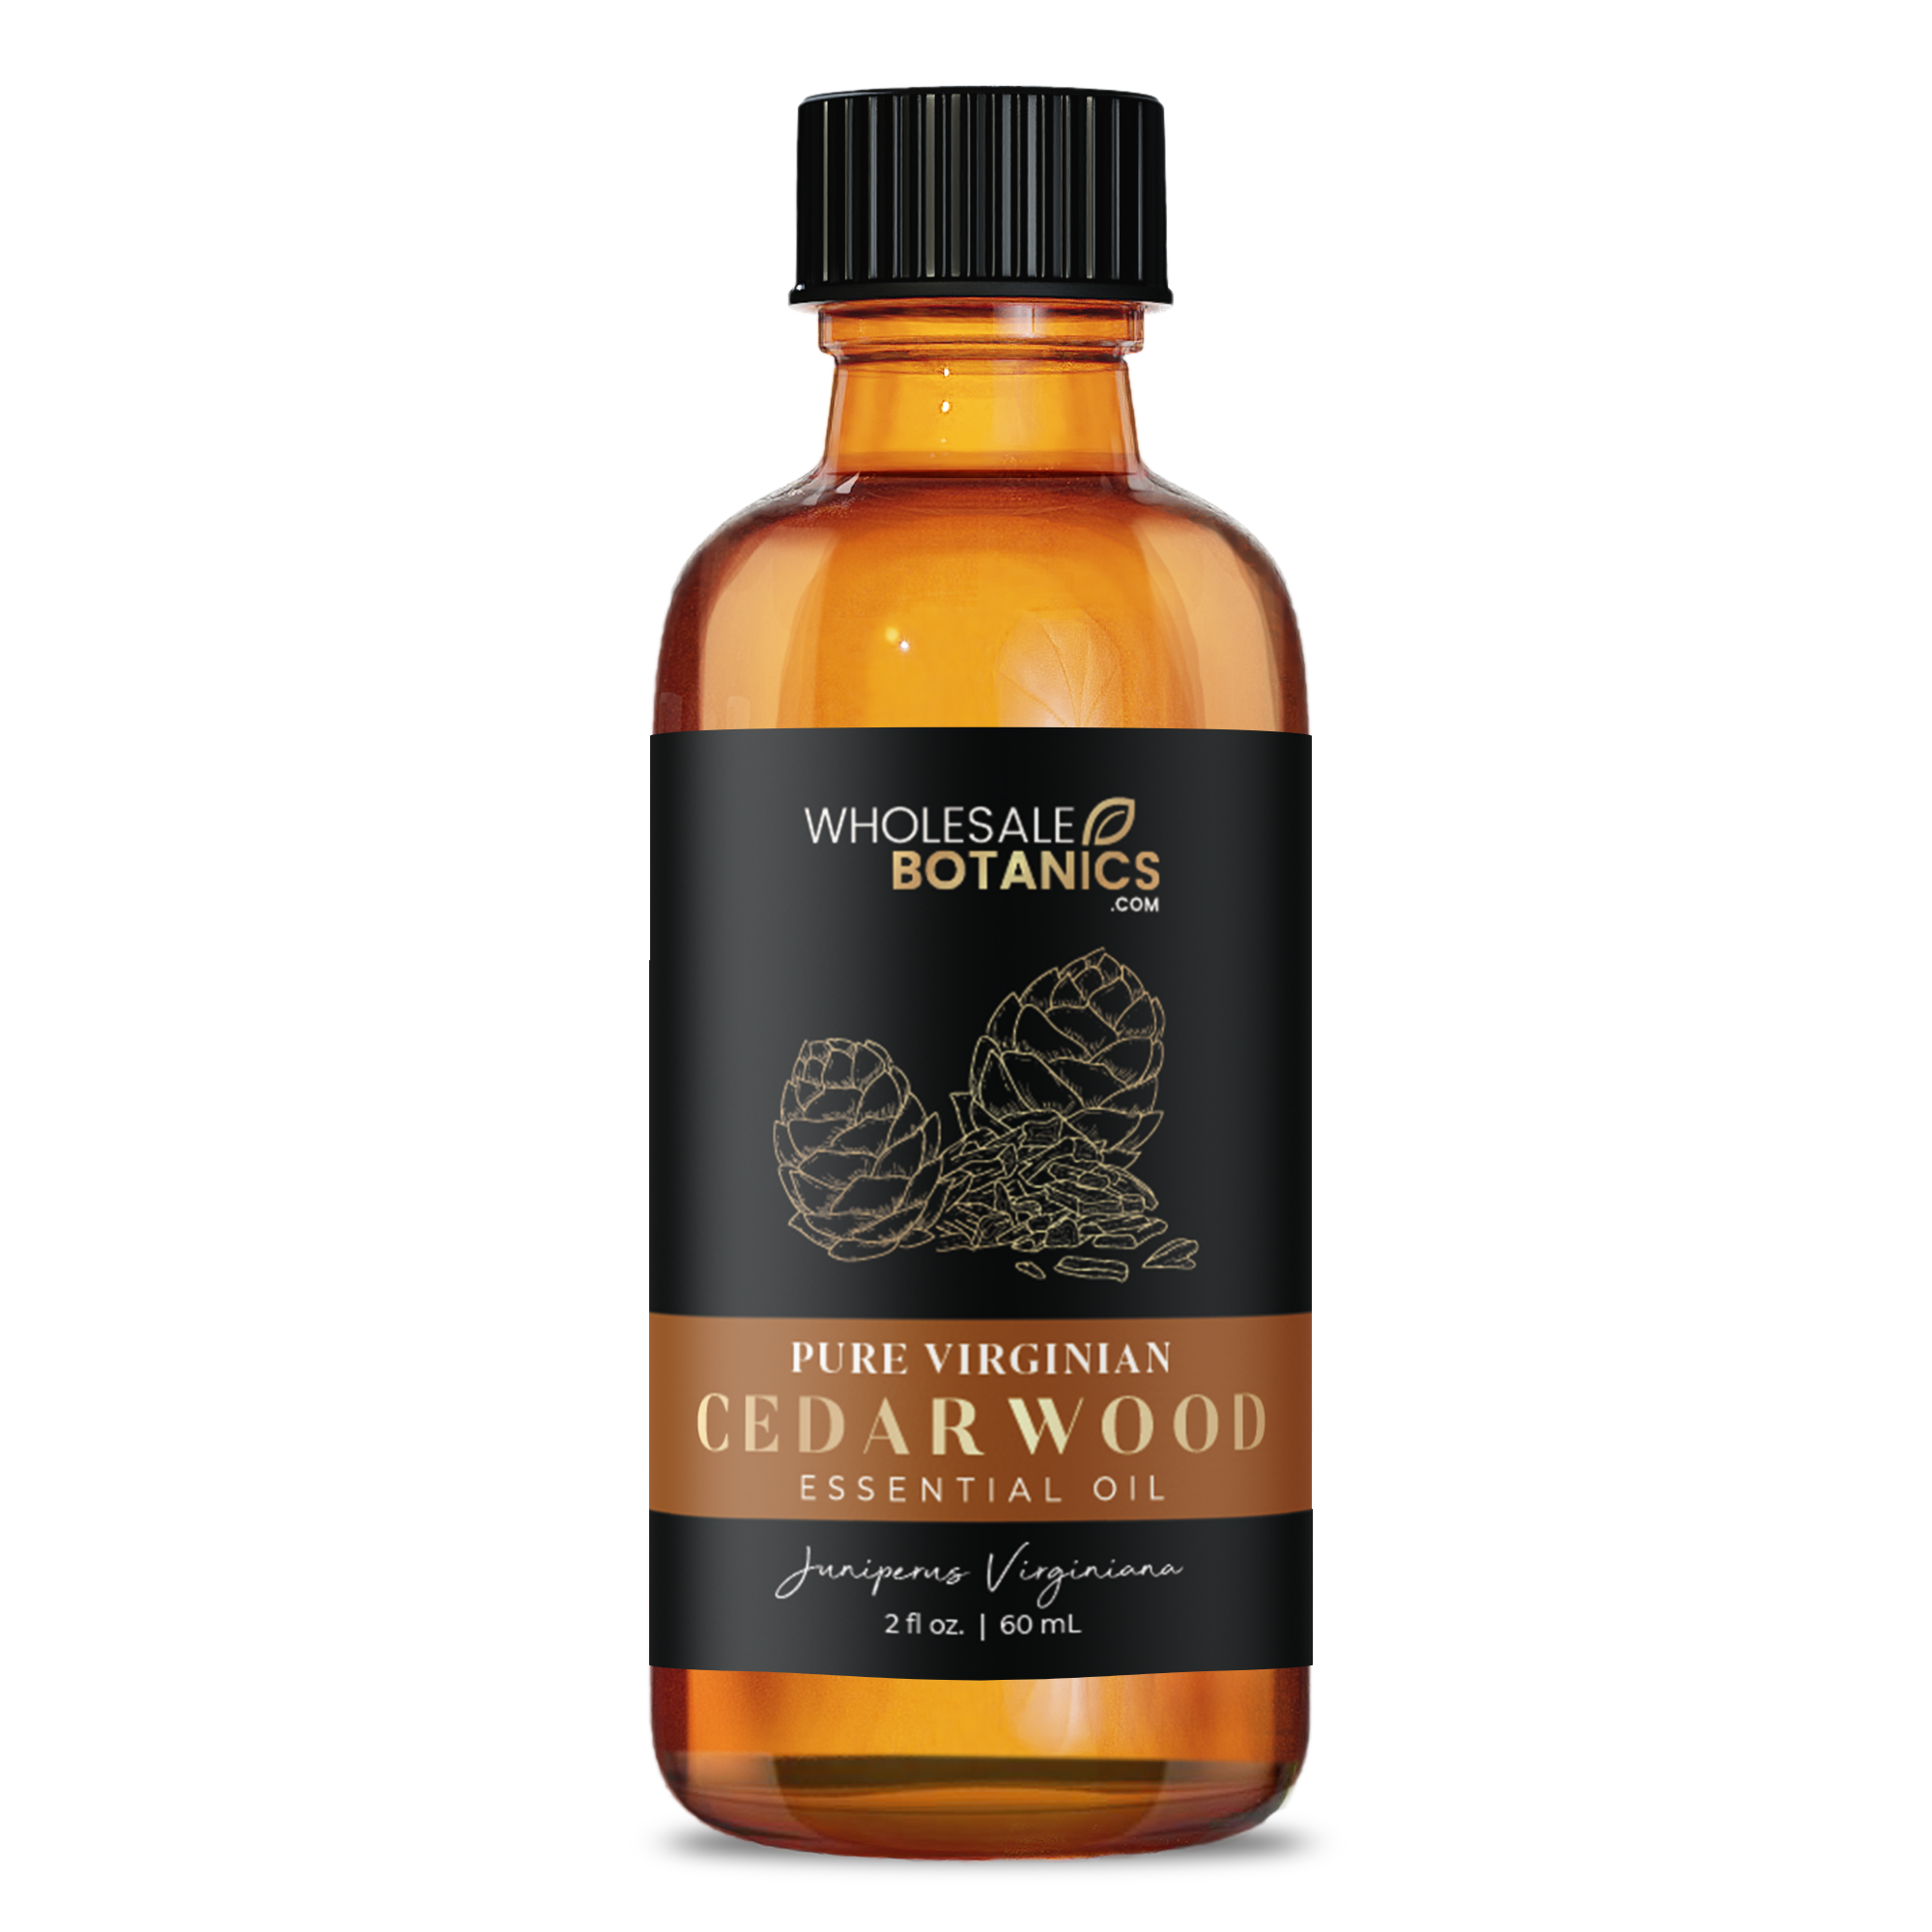 Cedarwood Essential Oil - Purity Virginian Cedarwood - 2 oz